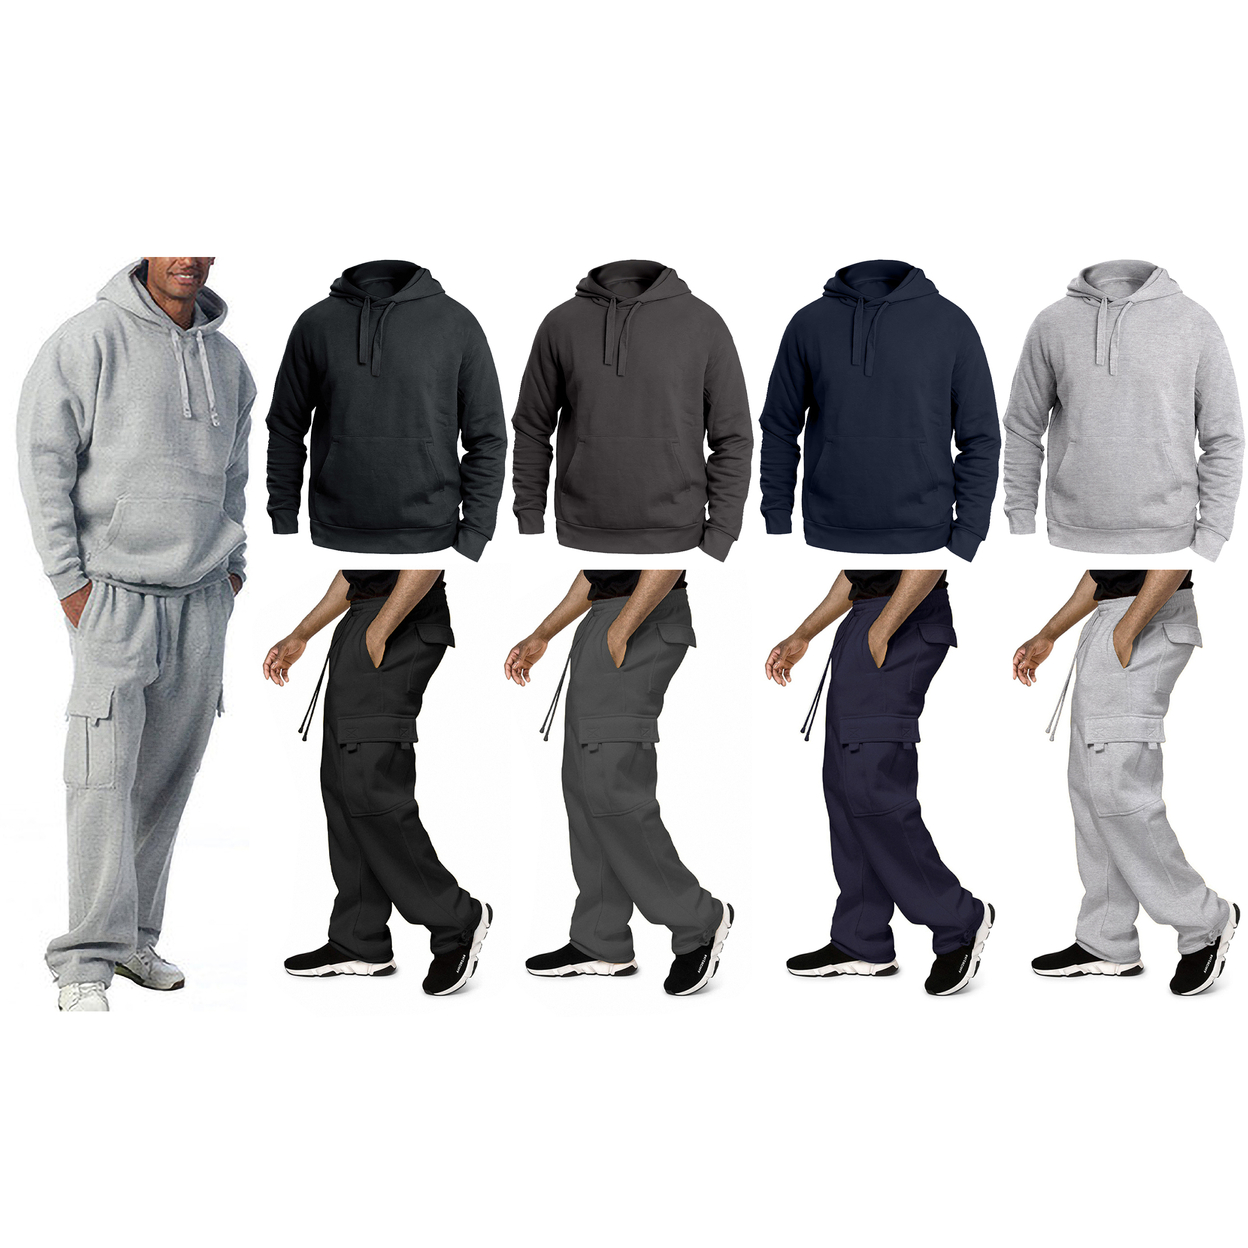 2-Pack: Men's Big & Tall Winter Warm Cozy Athletic Fleece Lined Multi-Pocket Cargo Sweatsuit - Navy, Medium